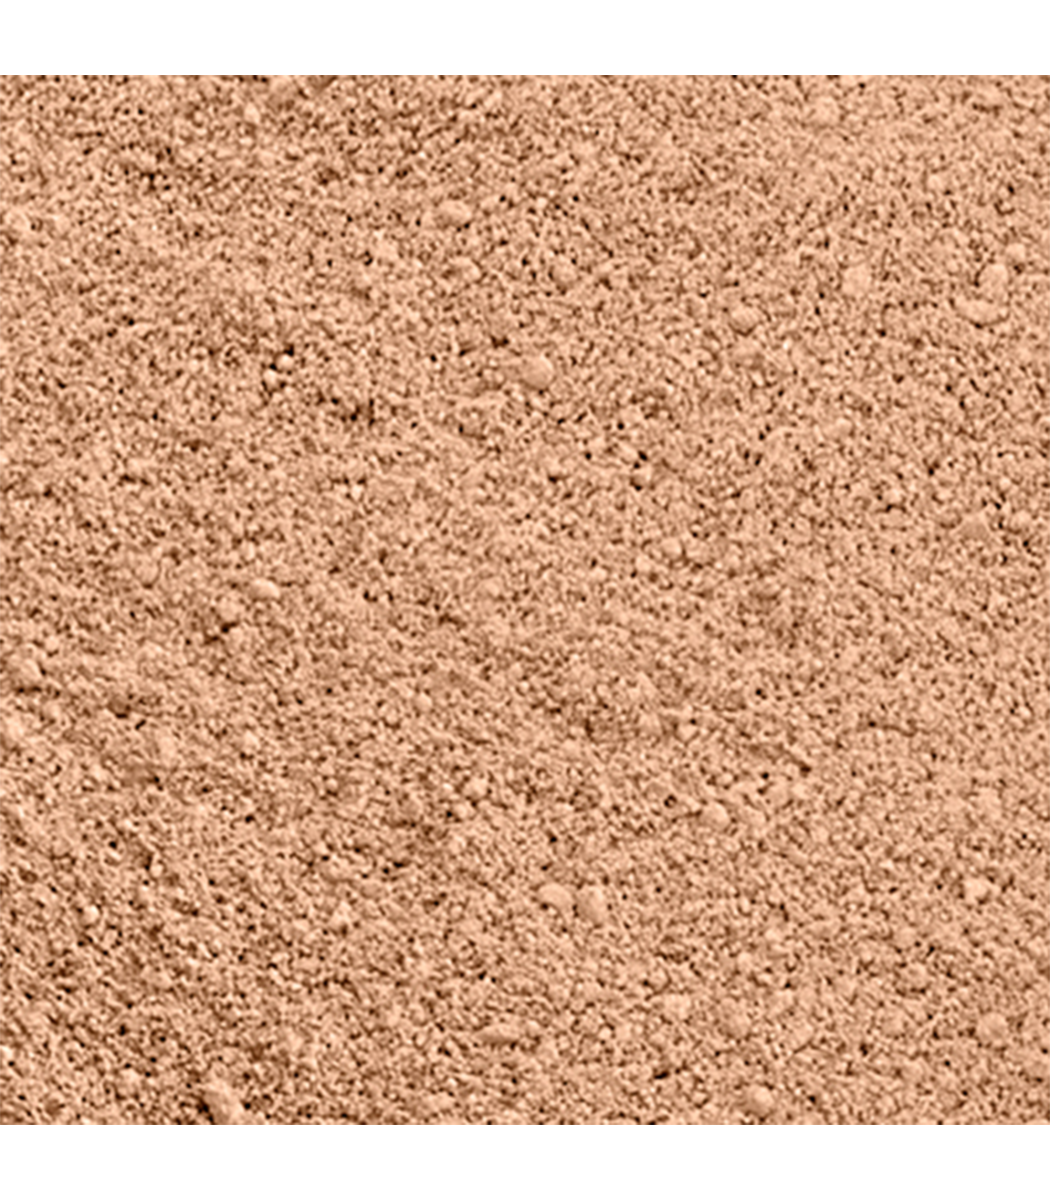 Mineral Powder FoundationMalu Wilz, Μake-up σε σκόνη με minerals για φυσική όψη μαζι με πινελο δωρο